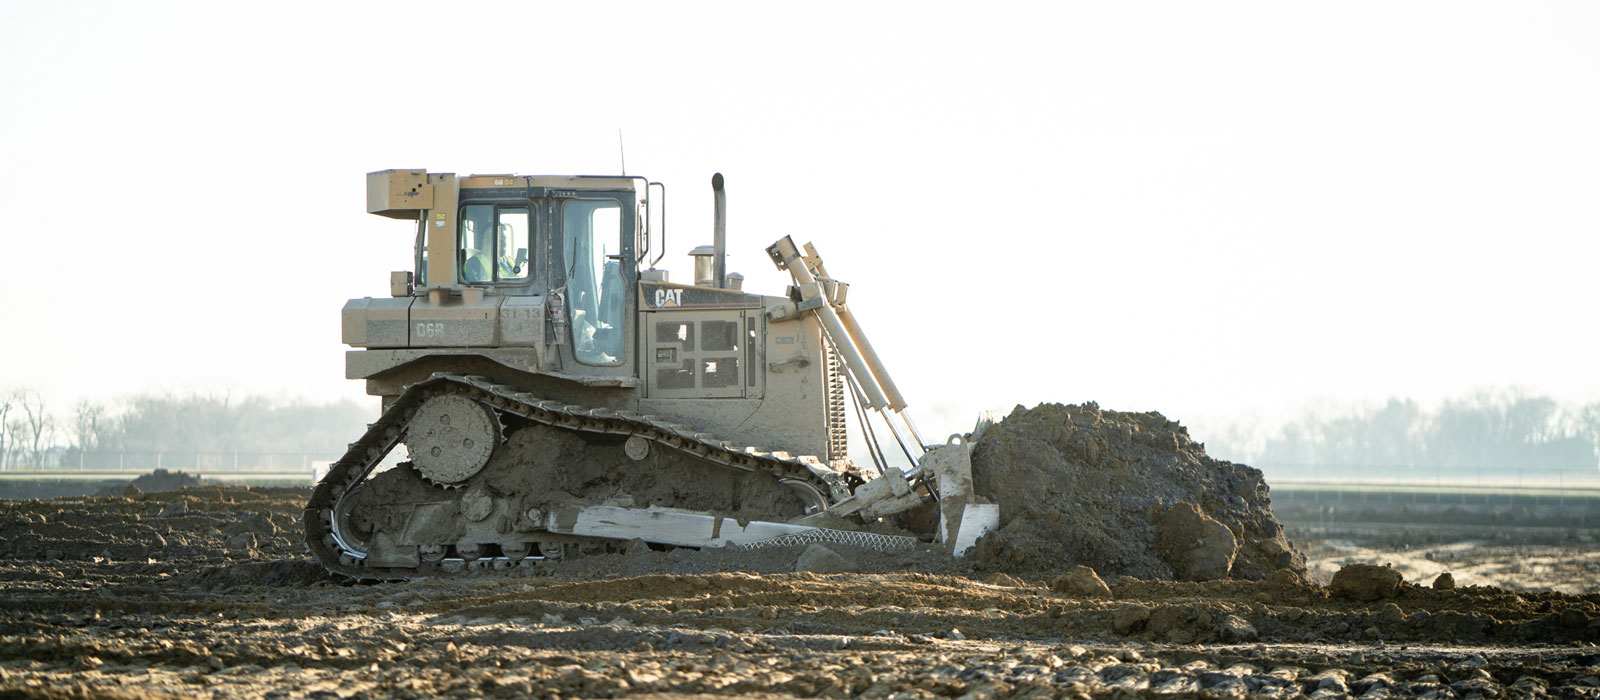 CAT D6B Dozer Equipment Moving Dirt at Job Site